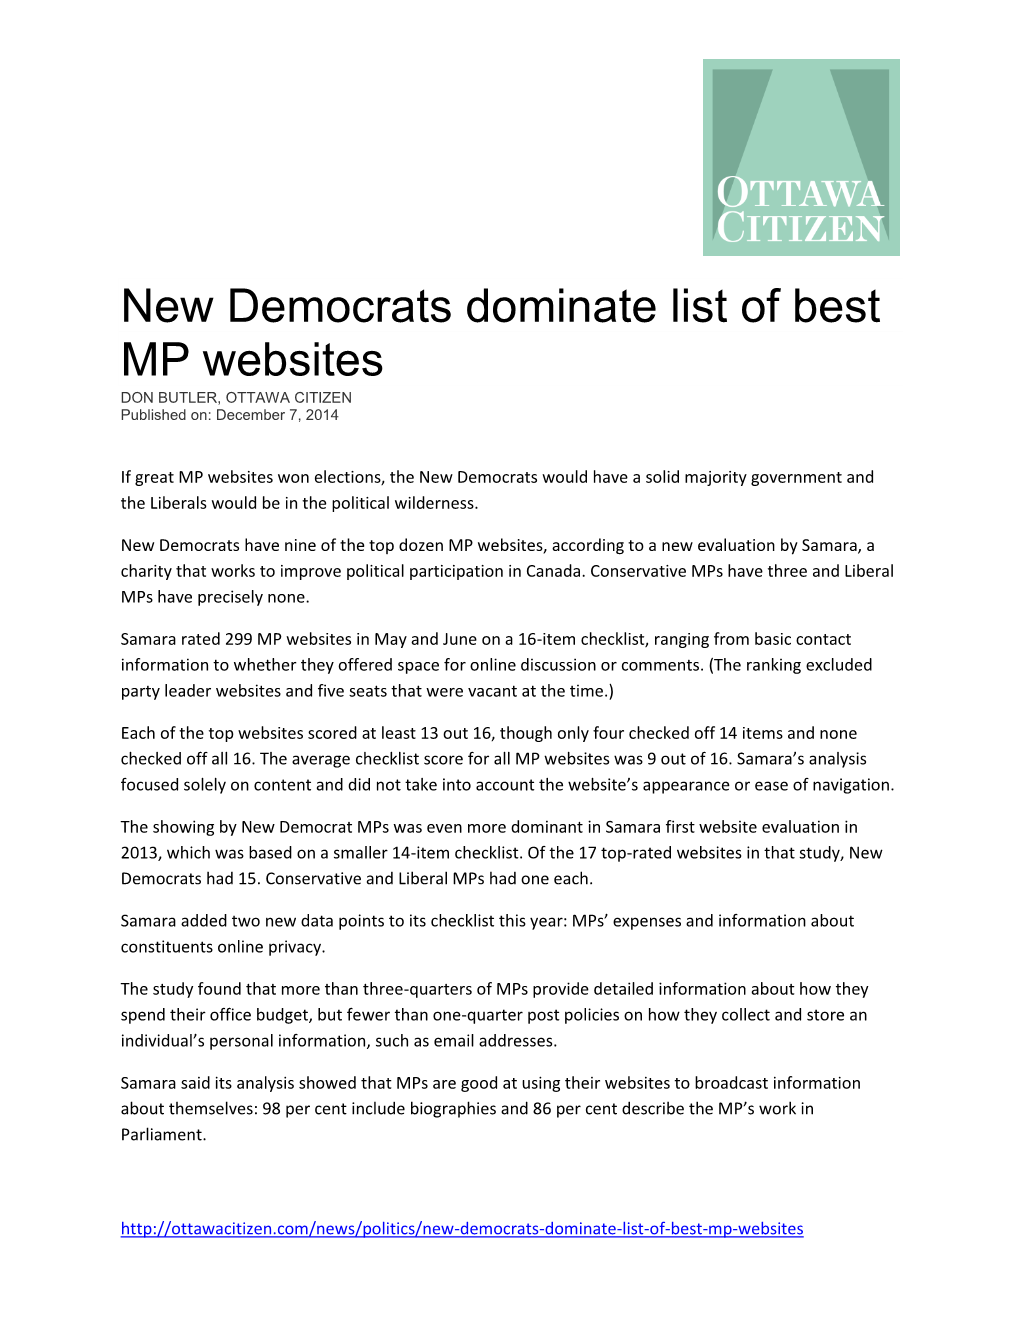 New Democrats Dominate List of Best MP Websites DON BUTLER, OTTAWA CITIZEN Published On: December 7, 2014